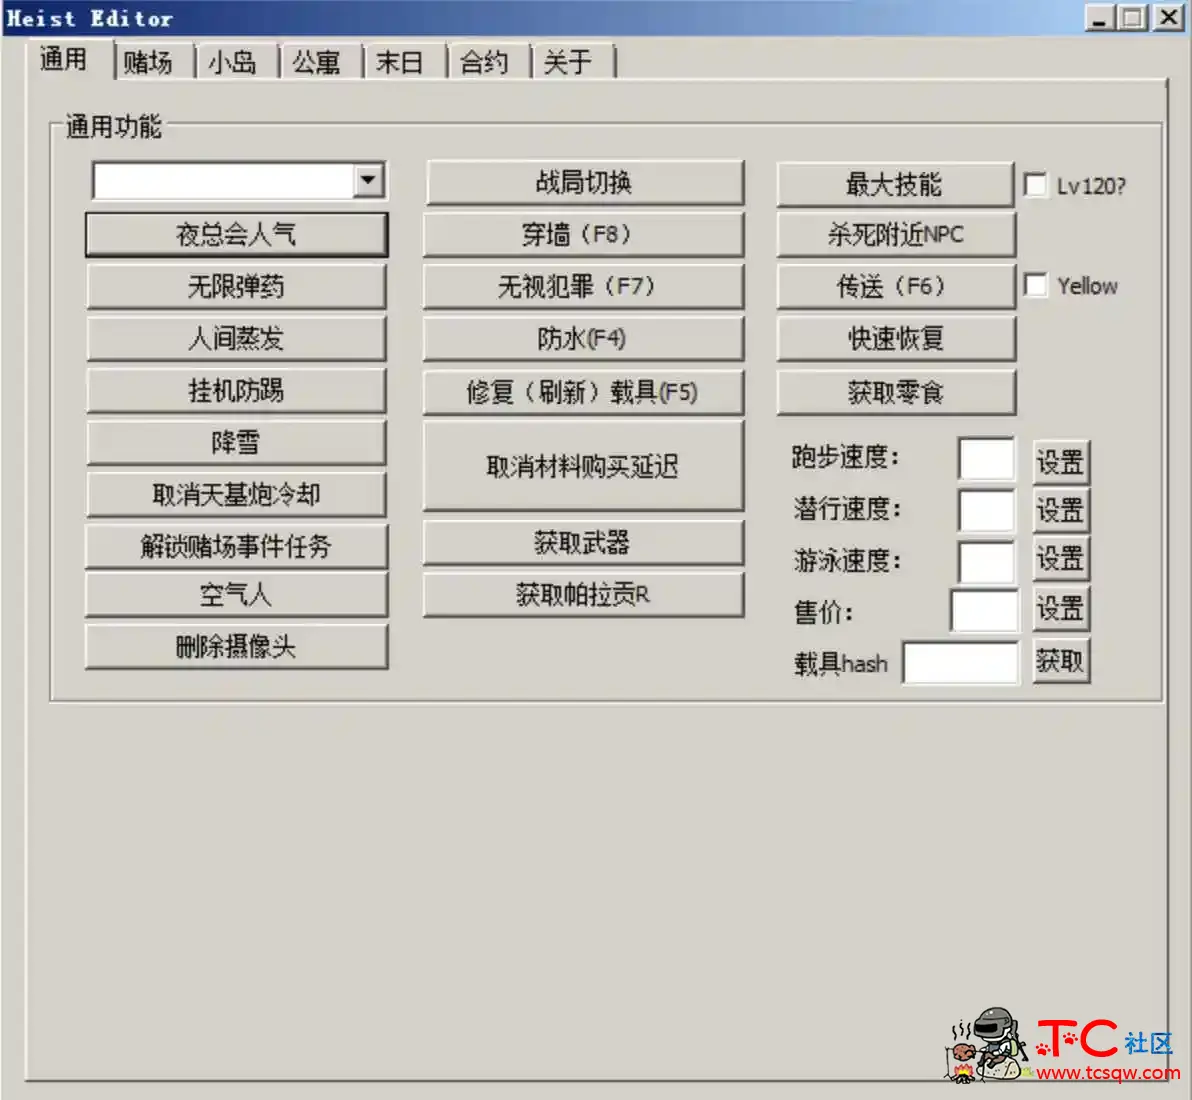 GTA5 Heist Editor外部抢劫编辑器 v3.5.7 屠城辅助网www.tcfz1.com8328